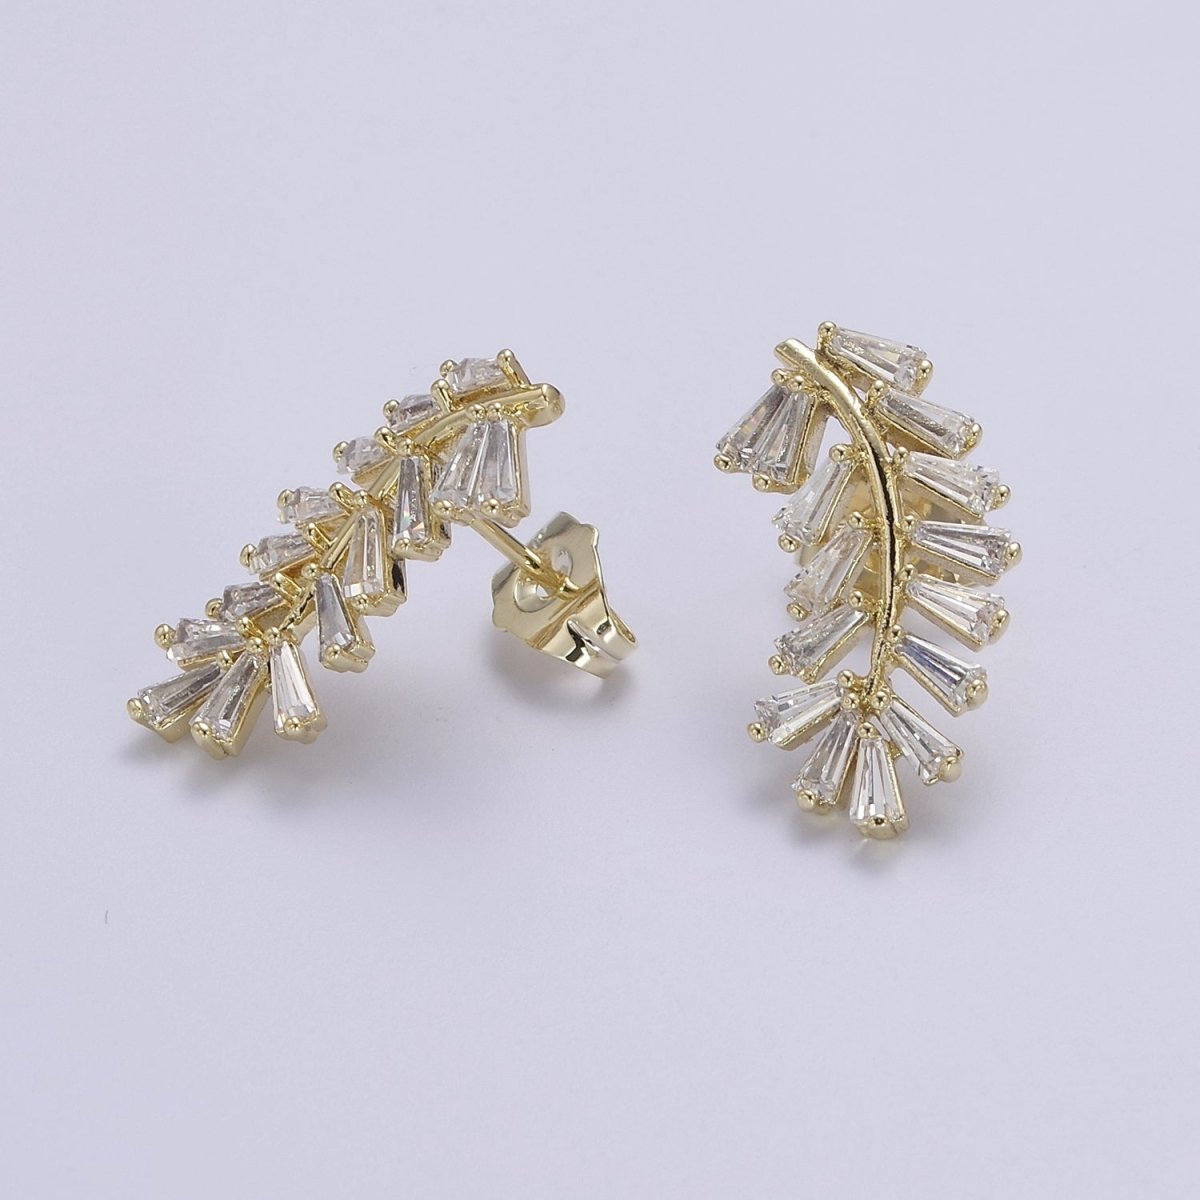 Dainty Gold Olive Leaf Earring Stud Earrings, Ear Climber, Delicate Earrings, Minimalist, Edgy Earrings CZ Cubic Simple earring Gift for Her V-159 - DLUXCA